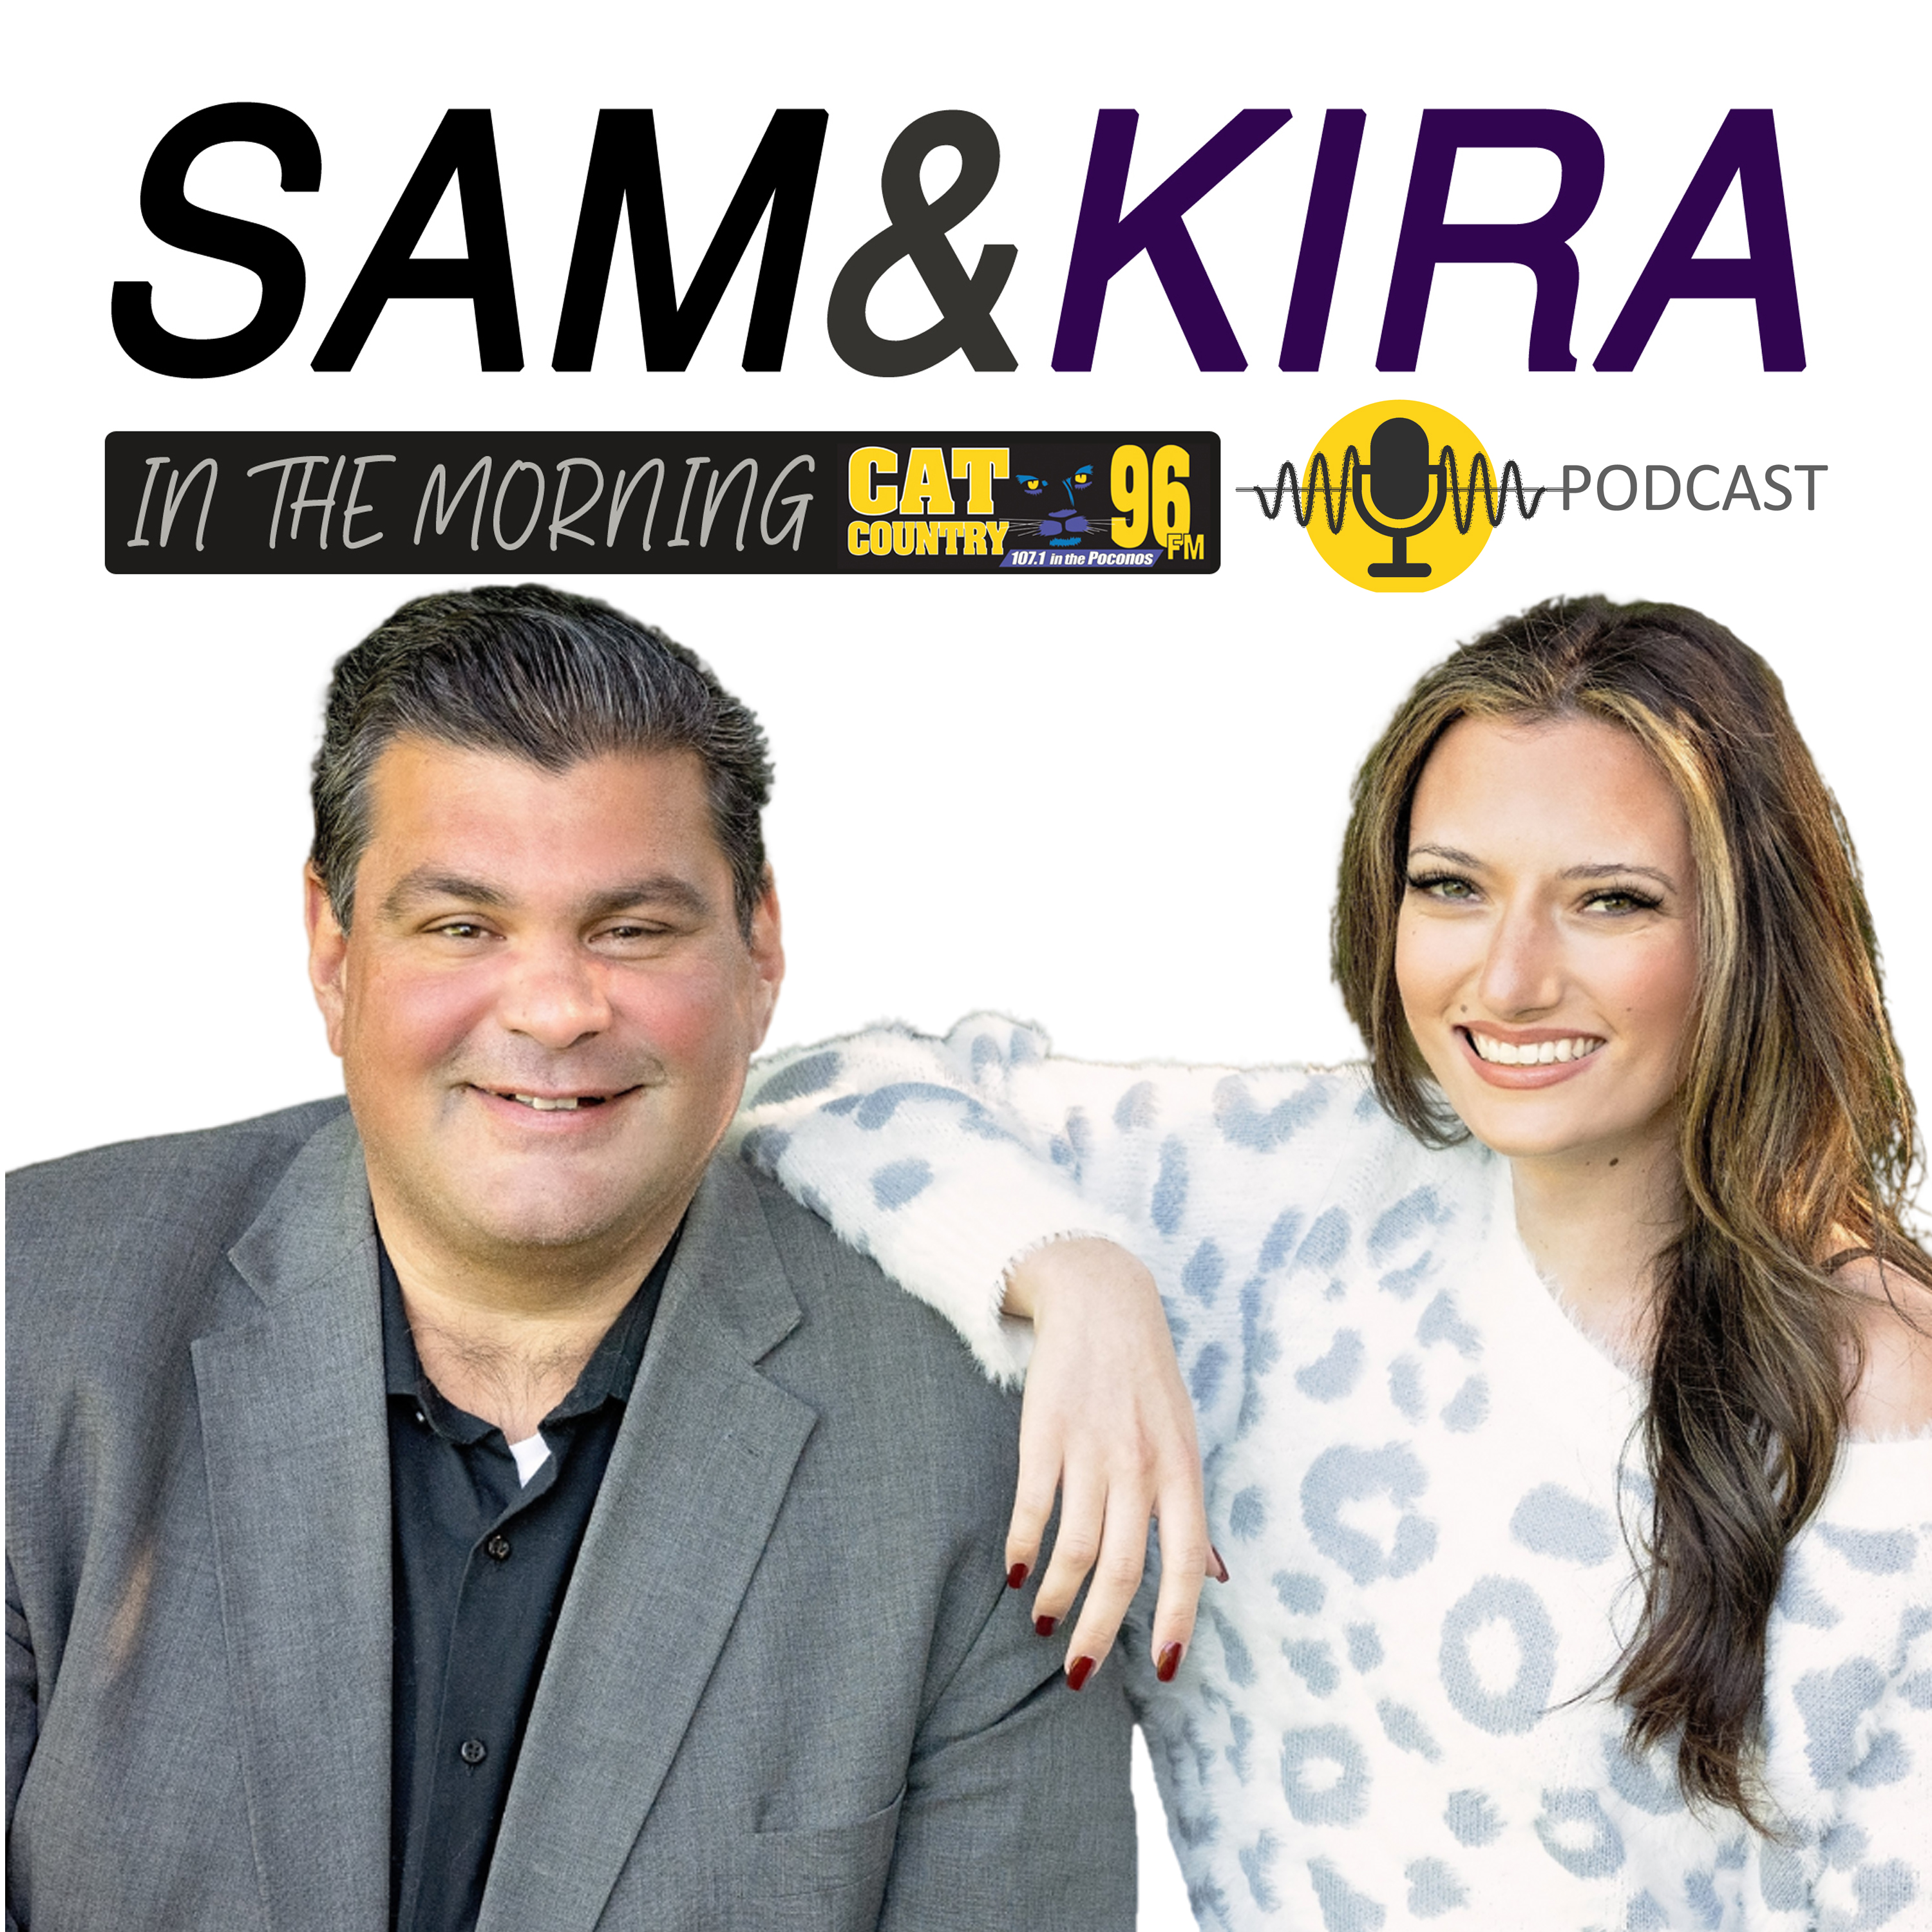 Sam & Kira After Breakfast: Kira is Left Alone